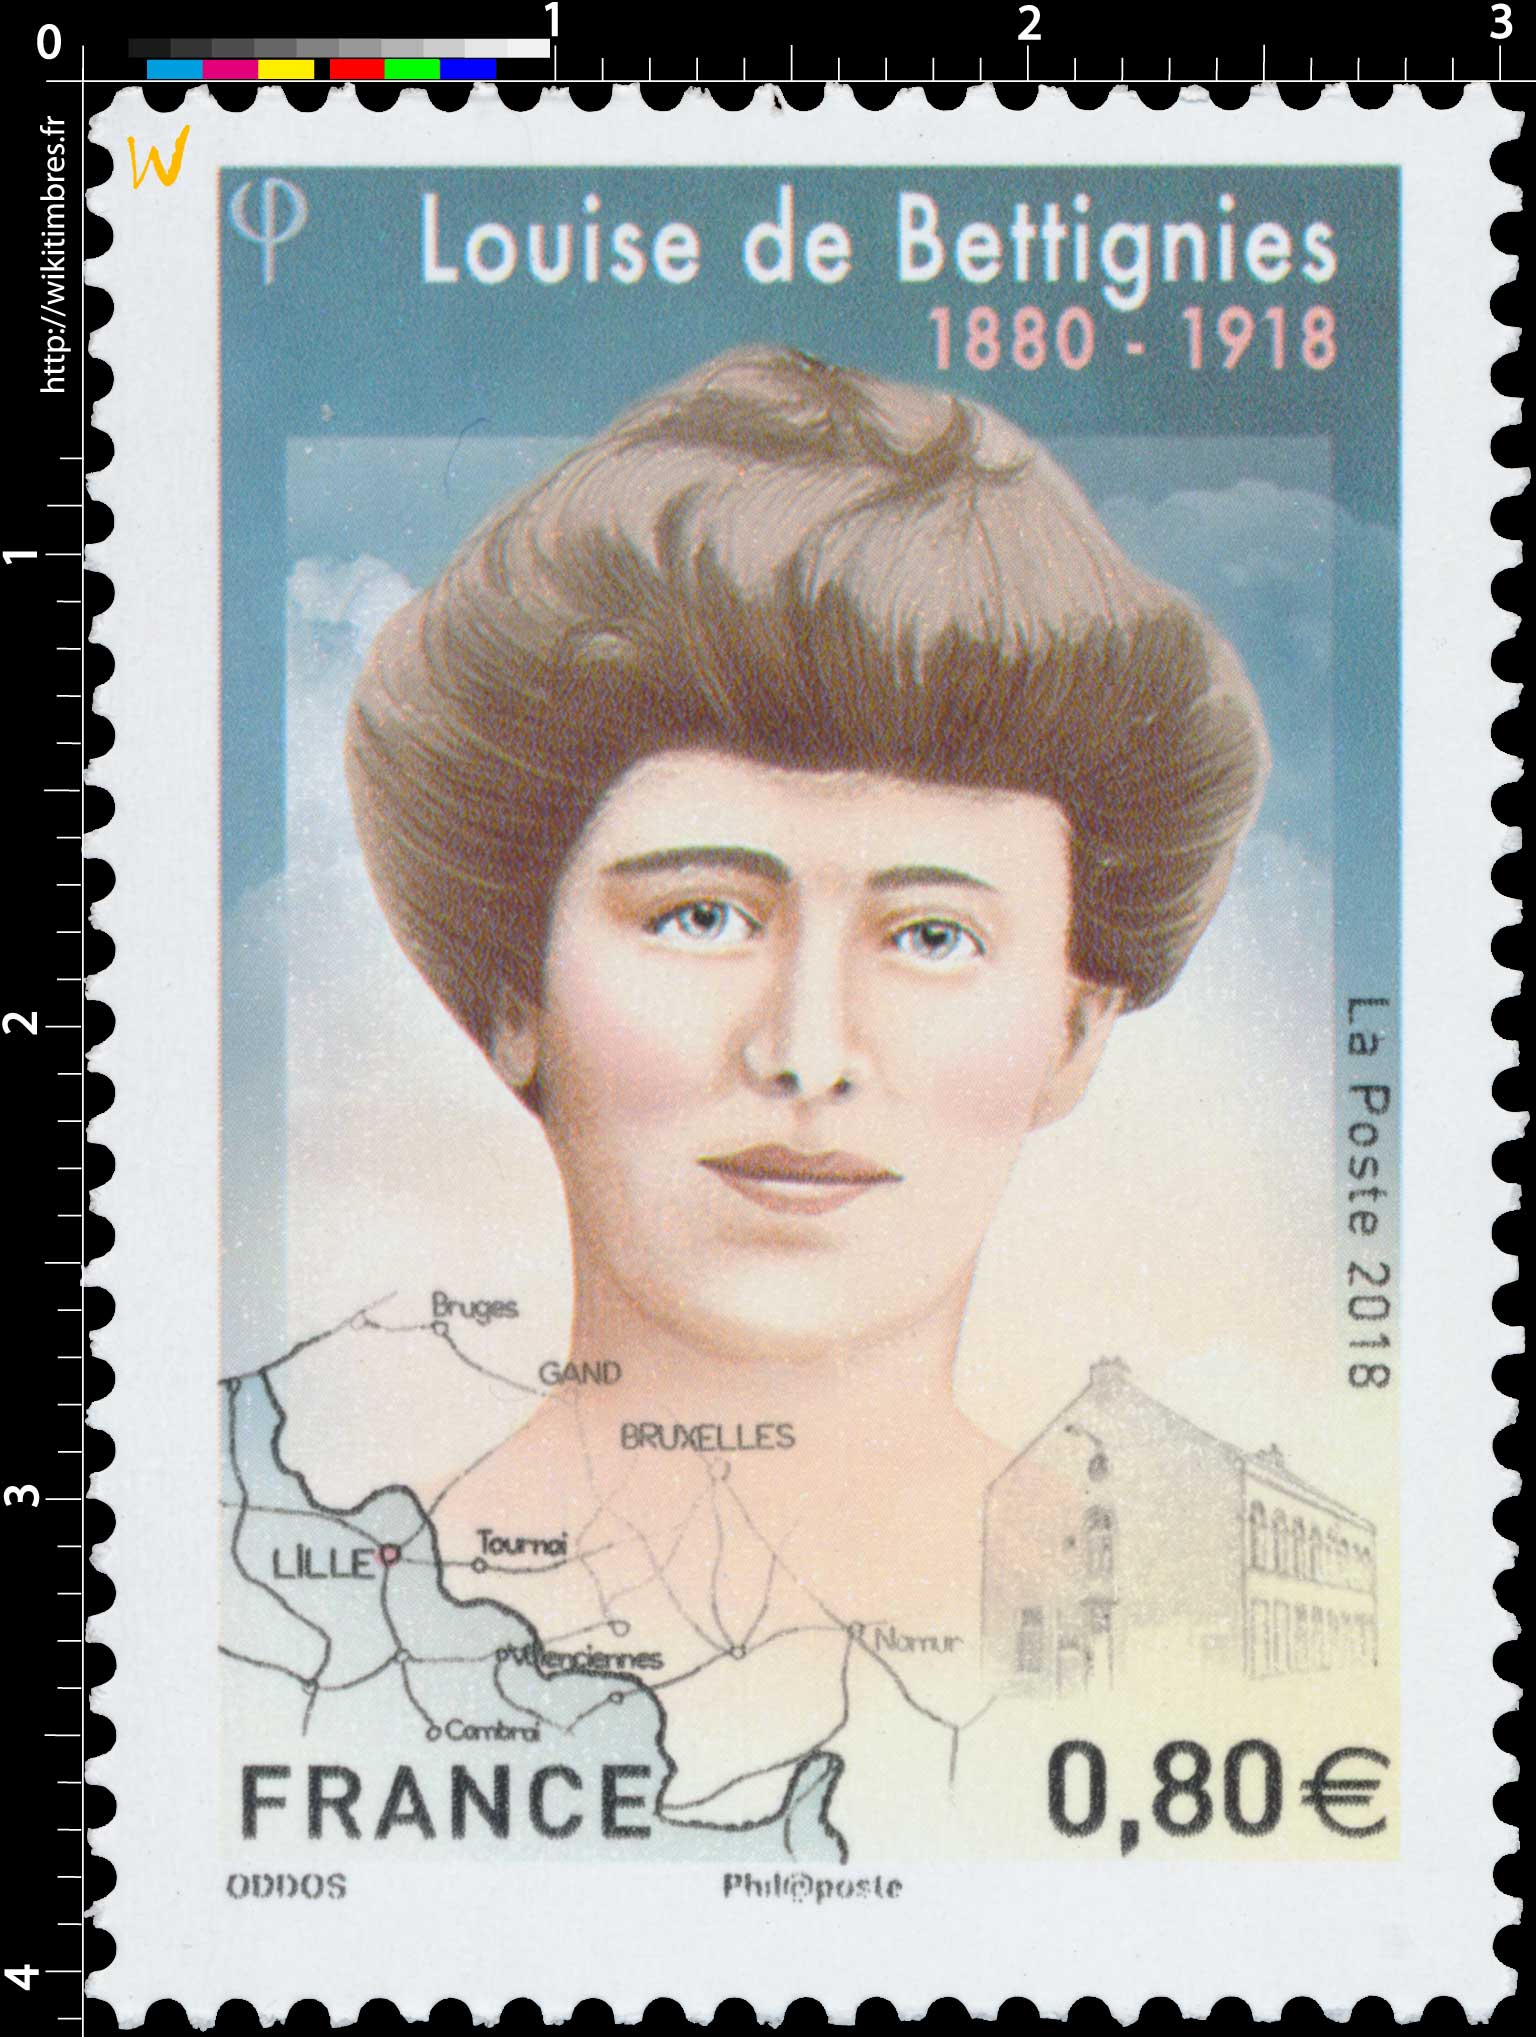 2018 Louise de Bettignies 1880 - 1918